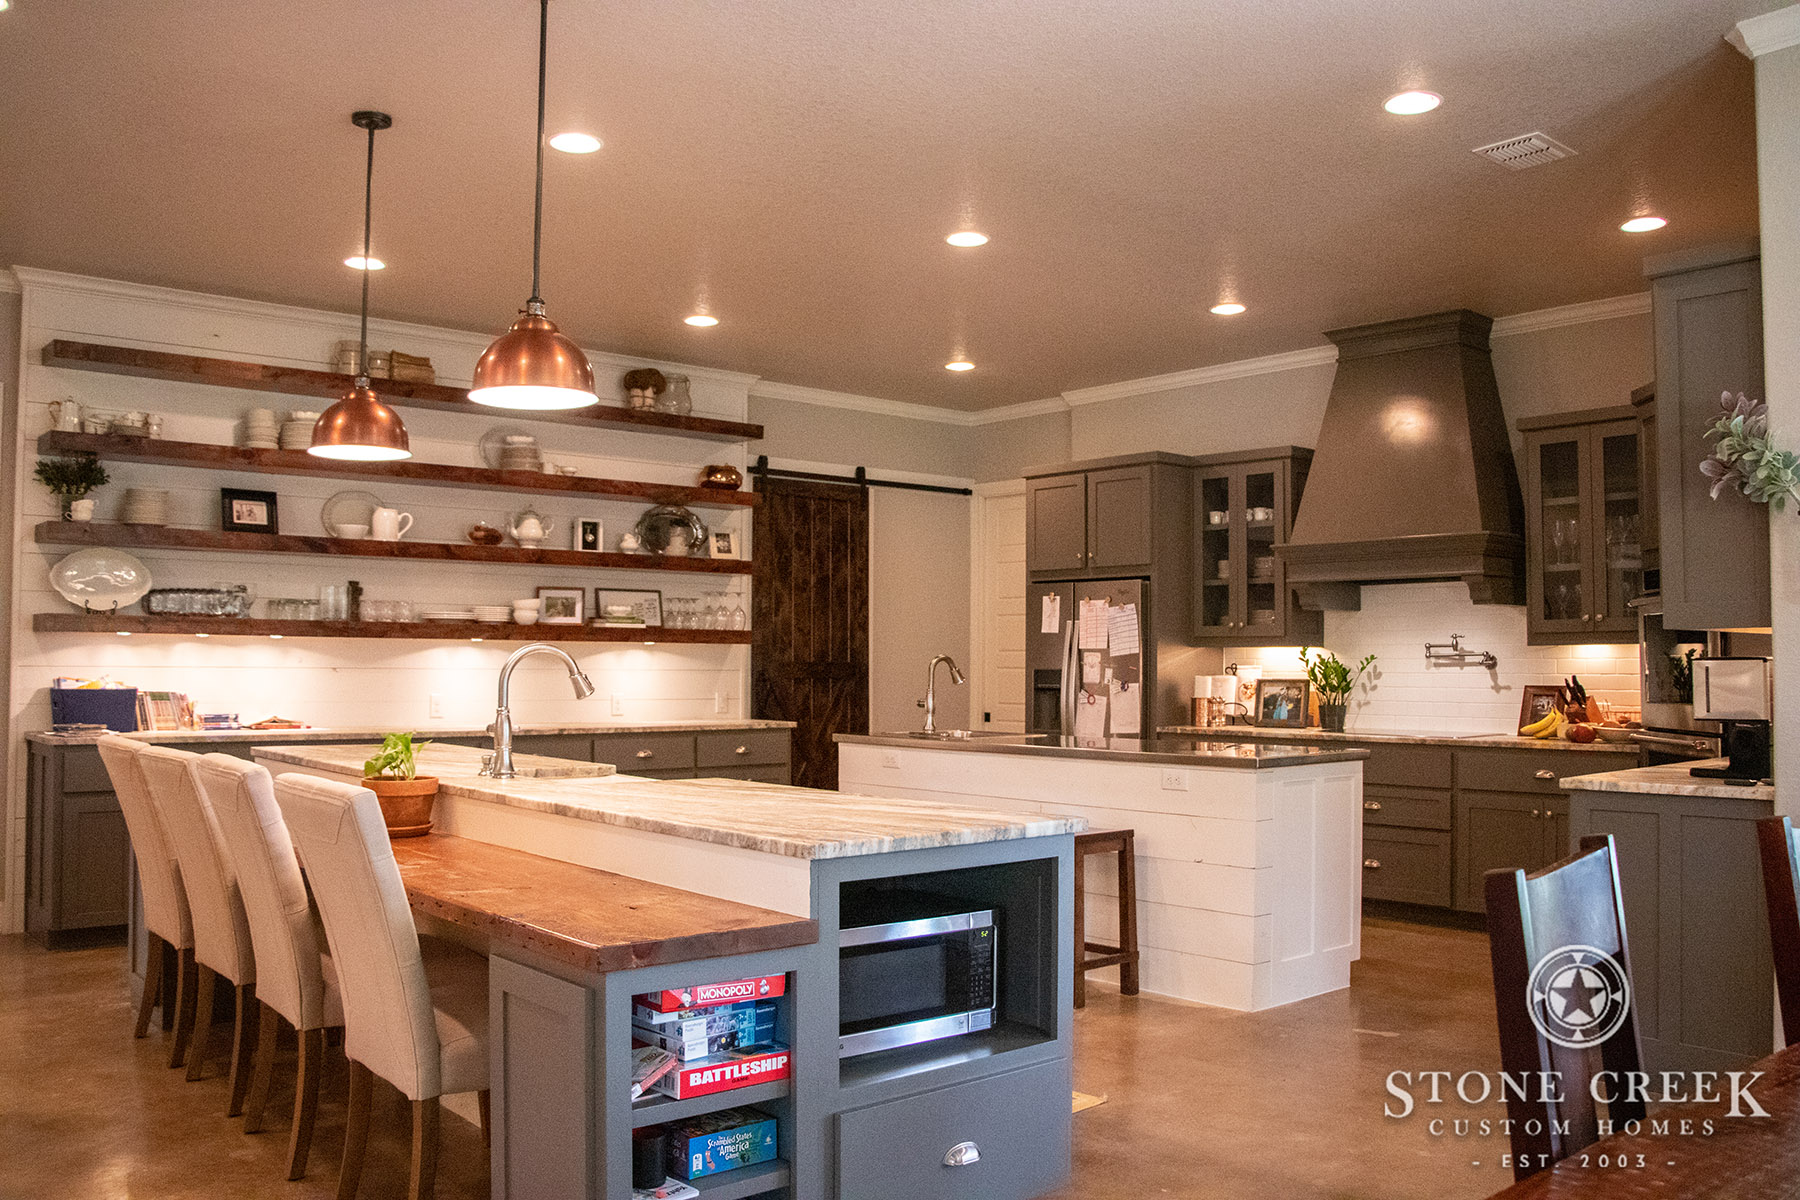 Stone Creek builds luxury kitchens